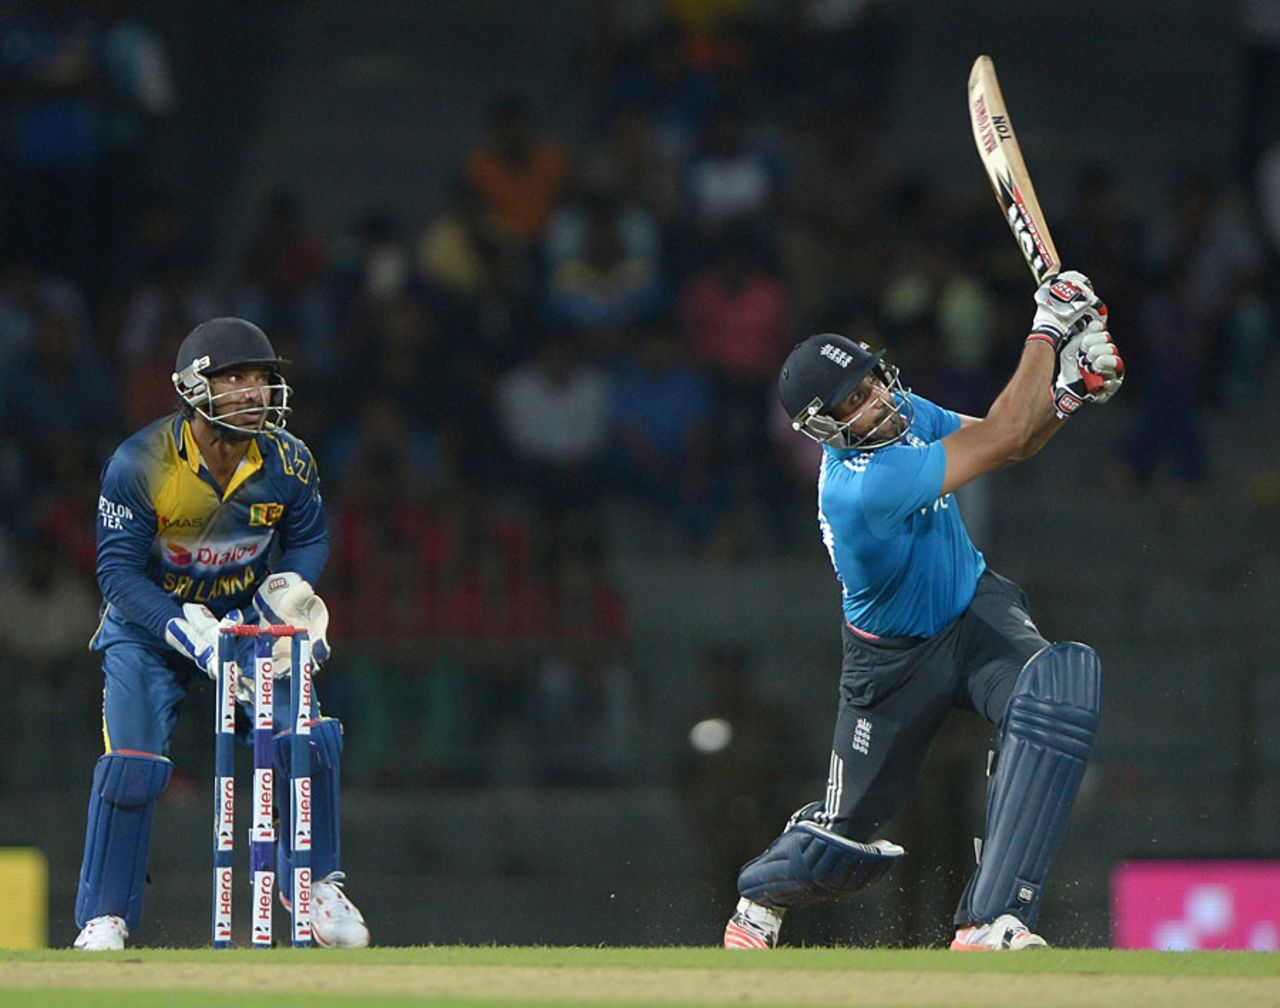 Ravi Bopara could not haul England across the line, Sri Lanka v England, 1st ODI, Colombo, November 26, 2014